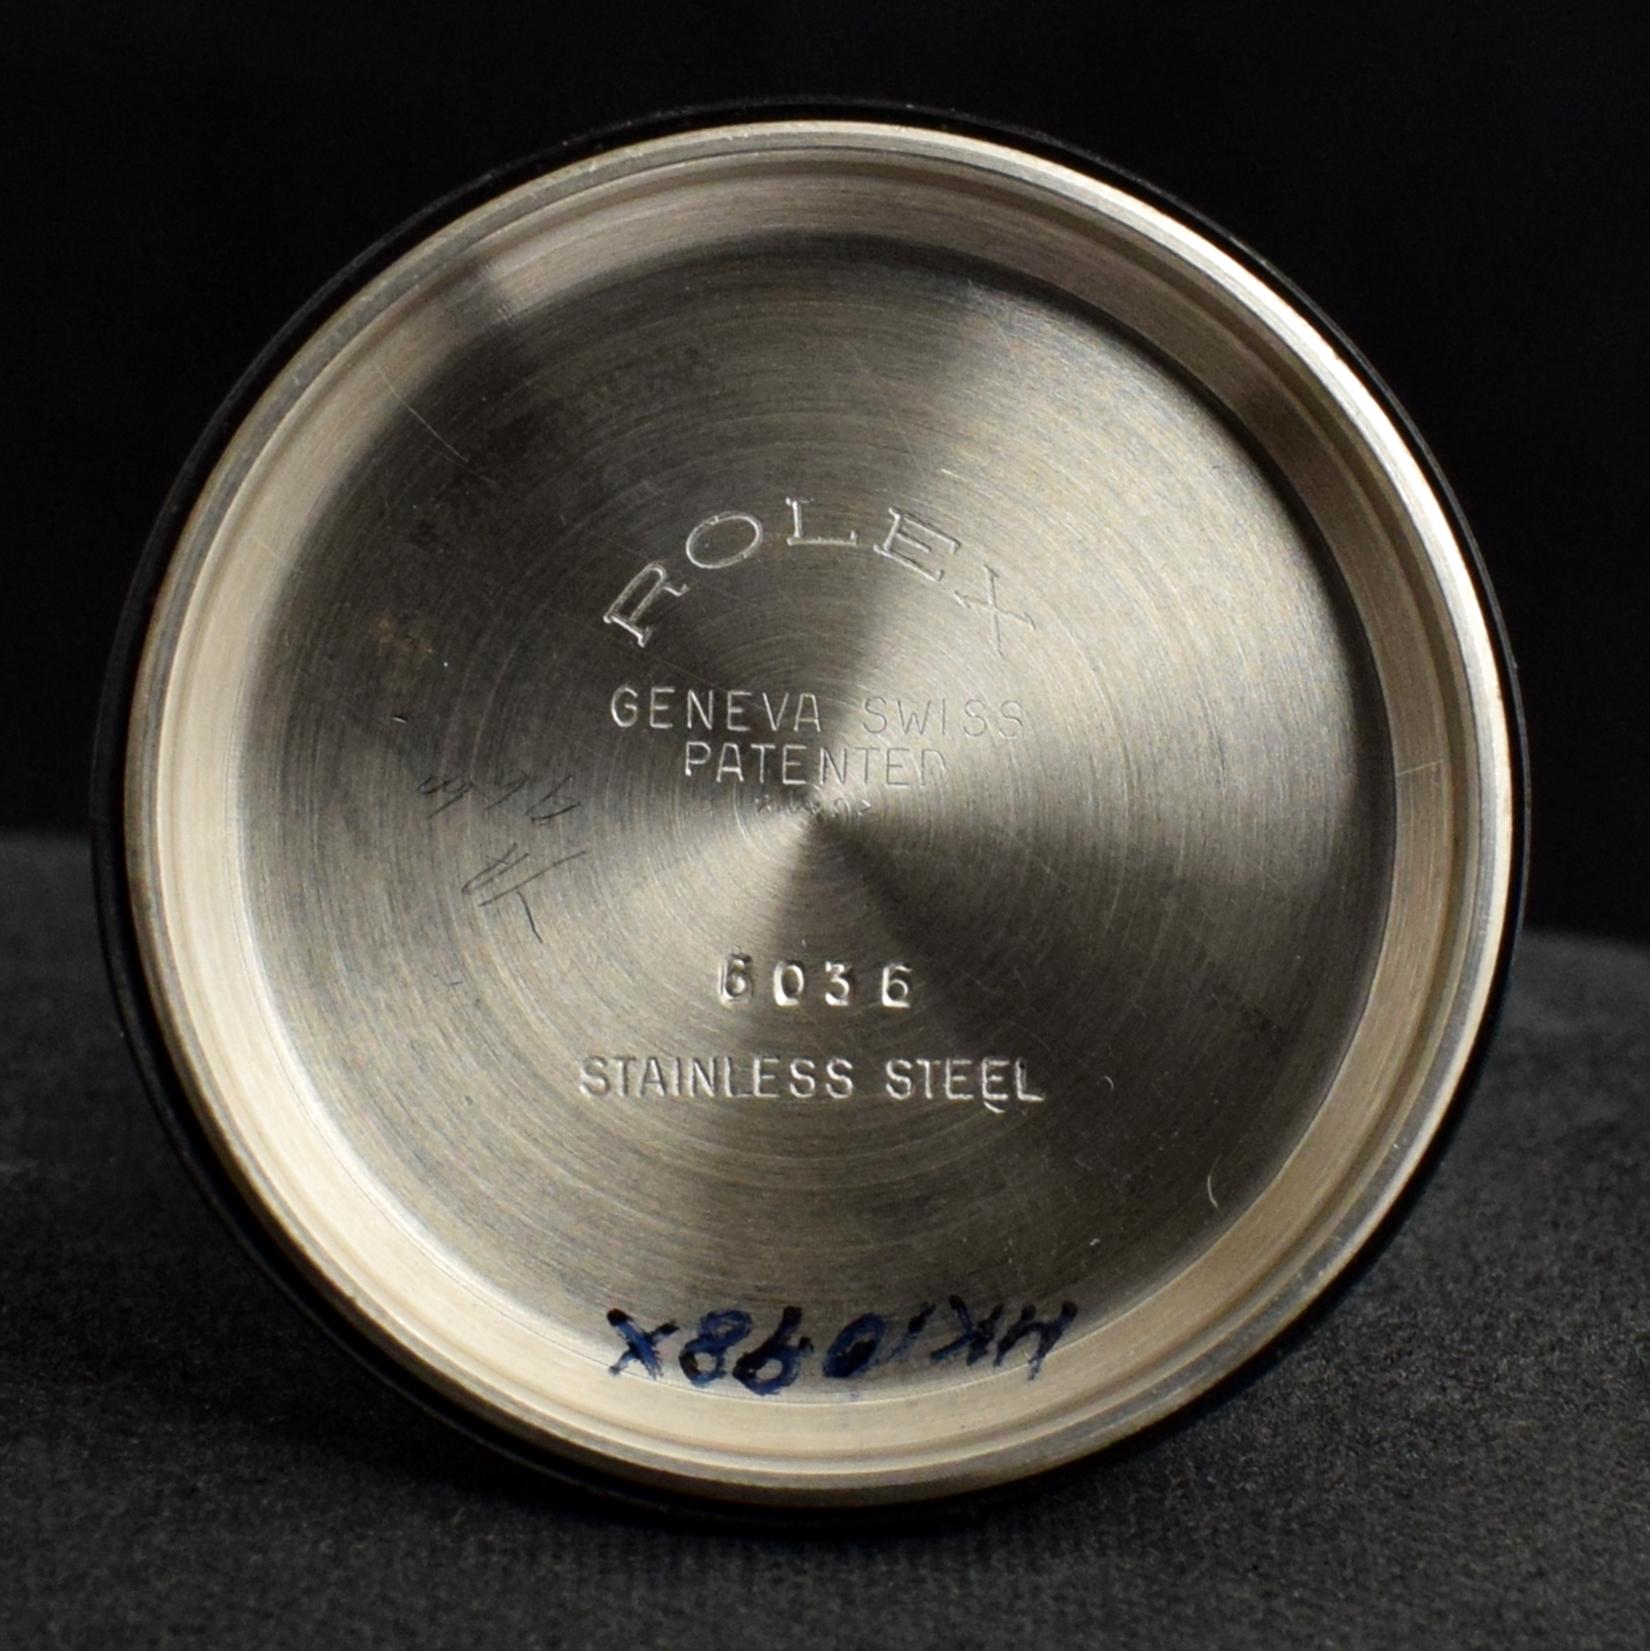 Rolex Killy Triple Date Calendar Chronograph 6036 Steel Manual Wind Watch, 1954 For Sale 7